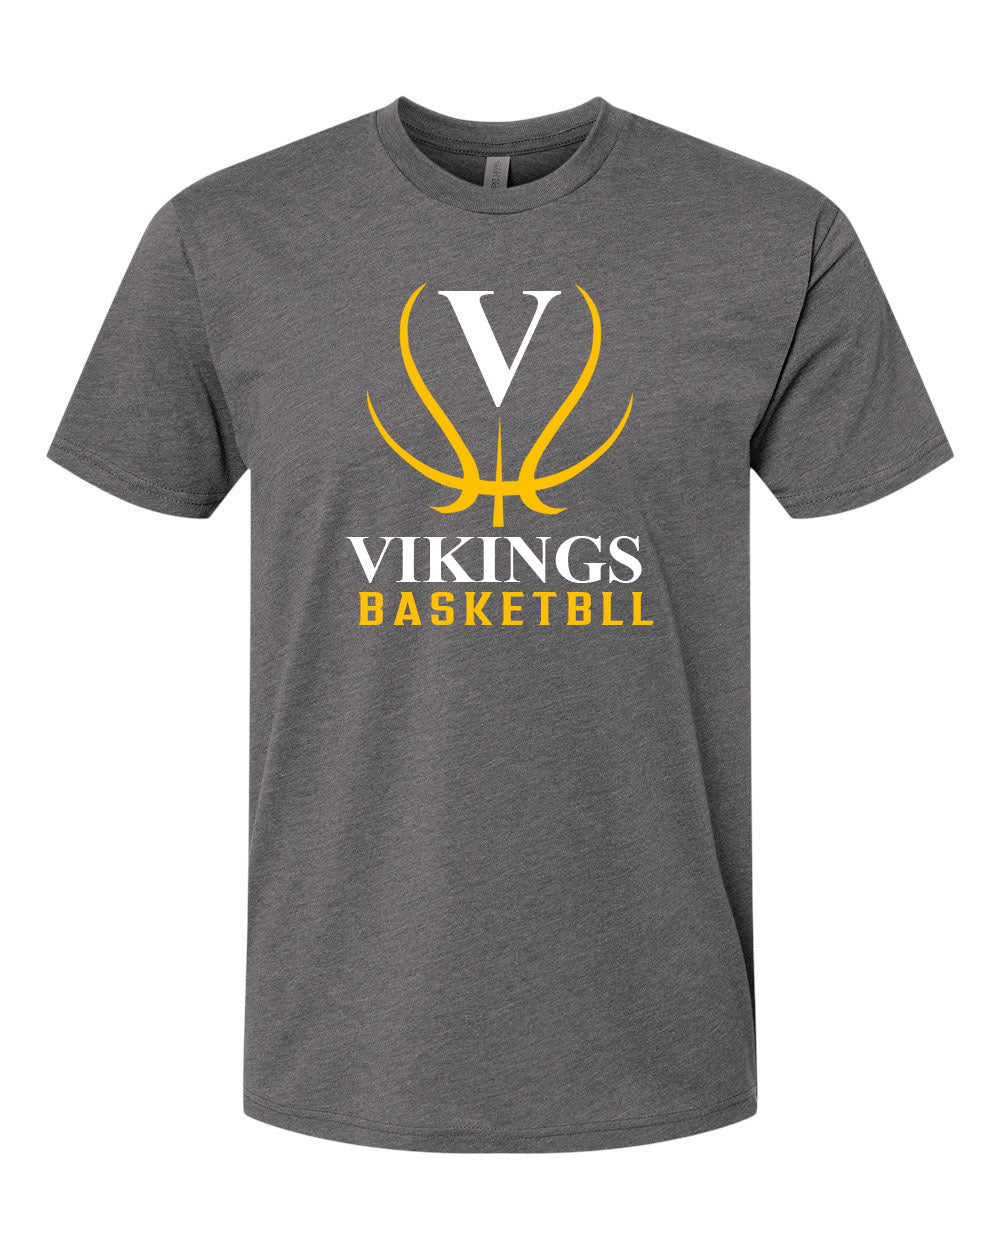 Vikings Basketball Design 3 T-Shirt